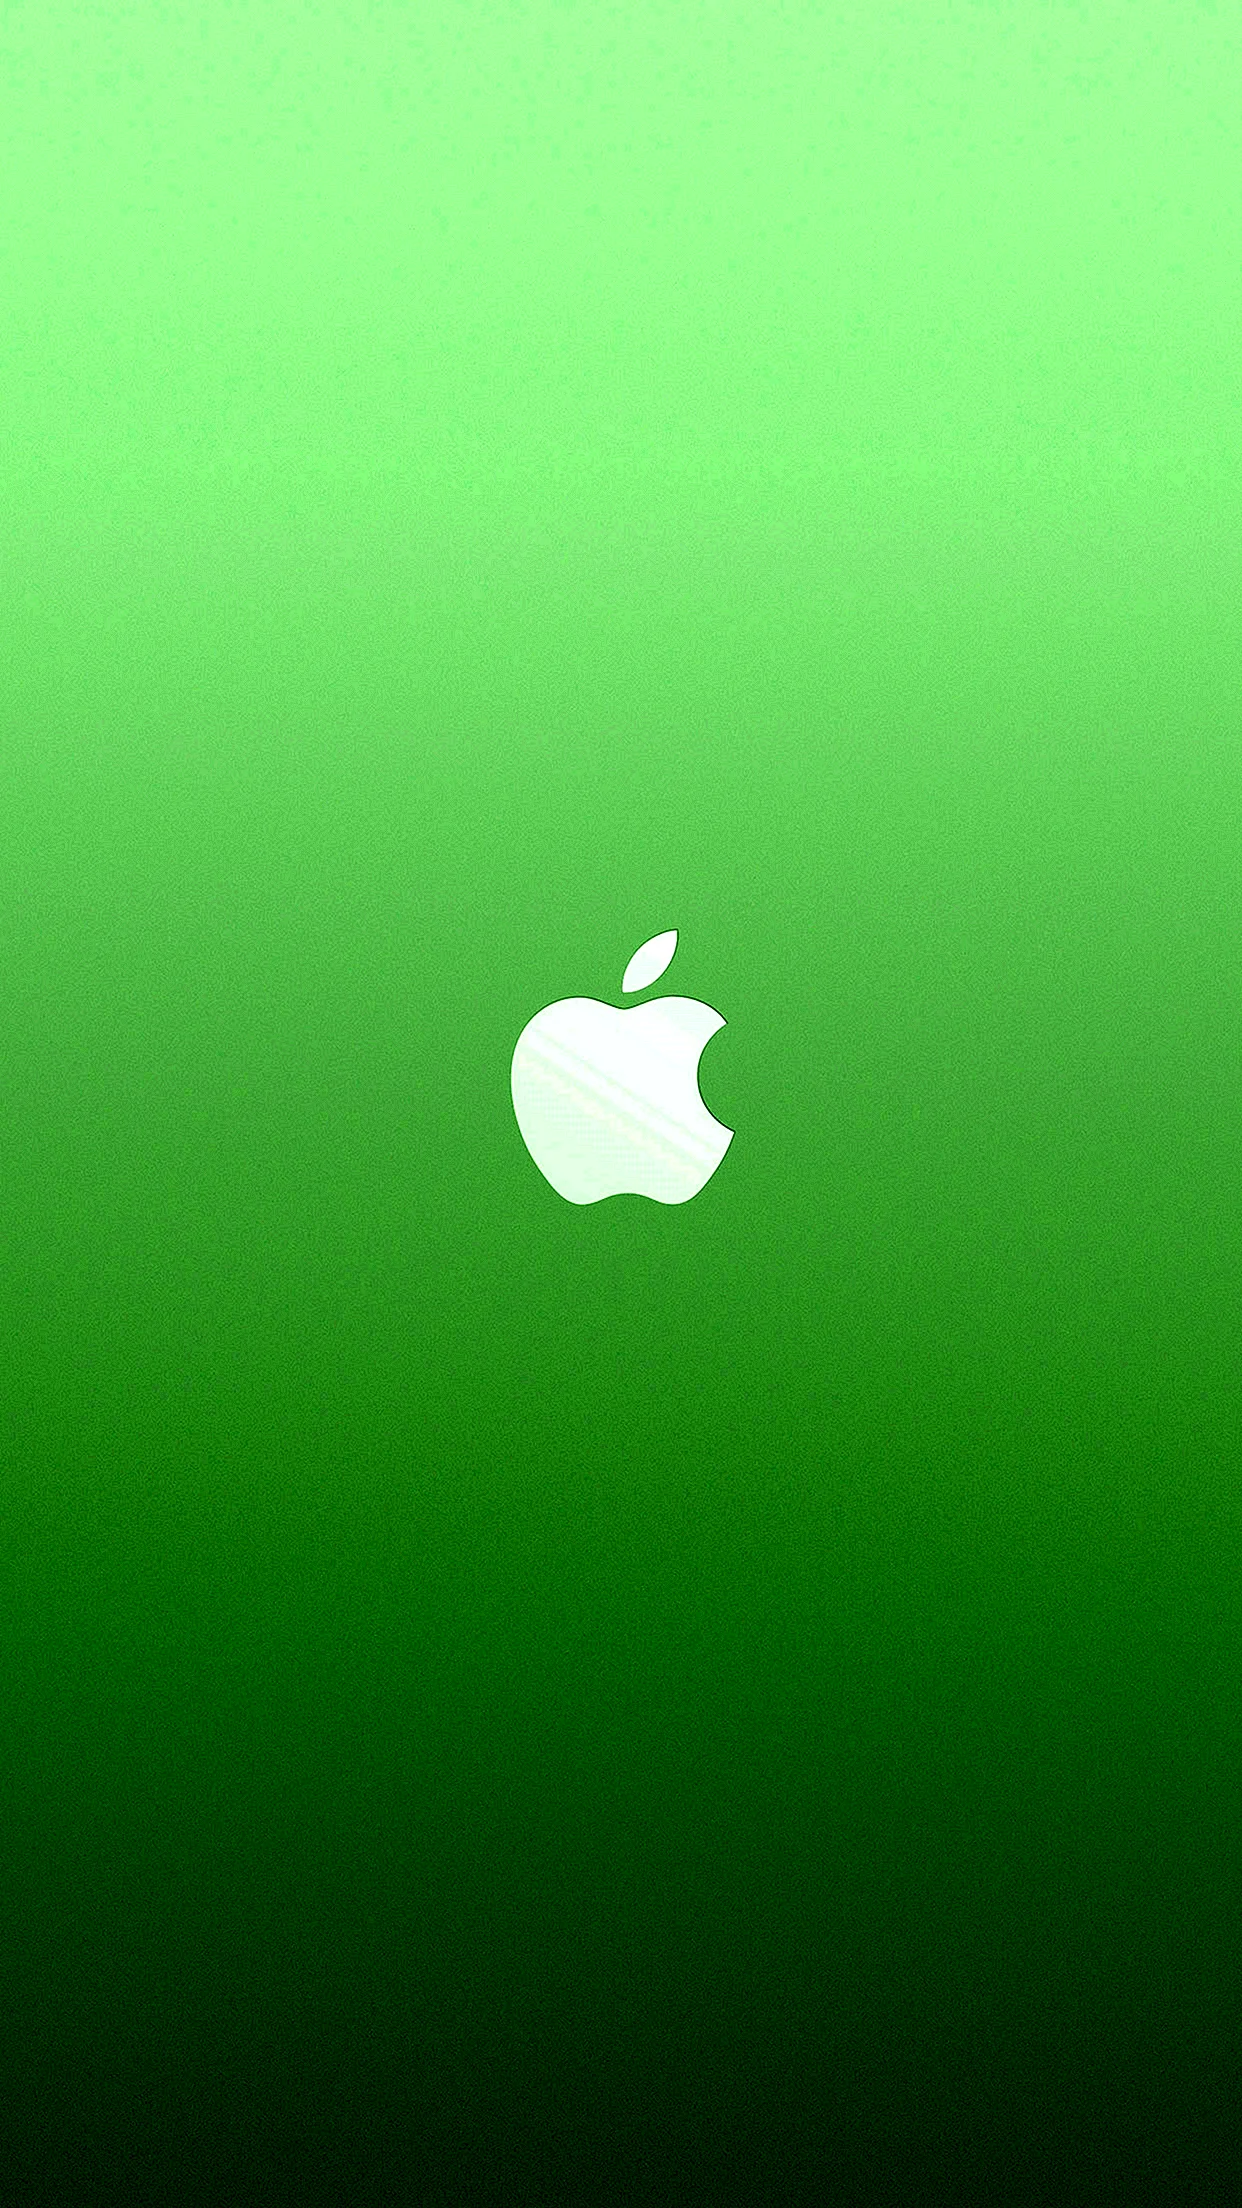 iPhone Green Art Wallpaper For iPhone